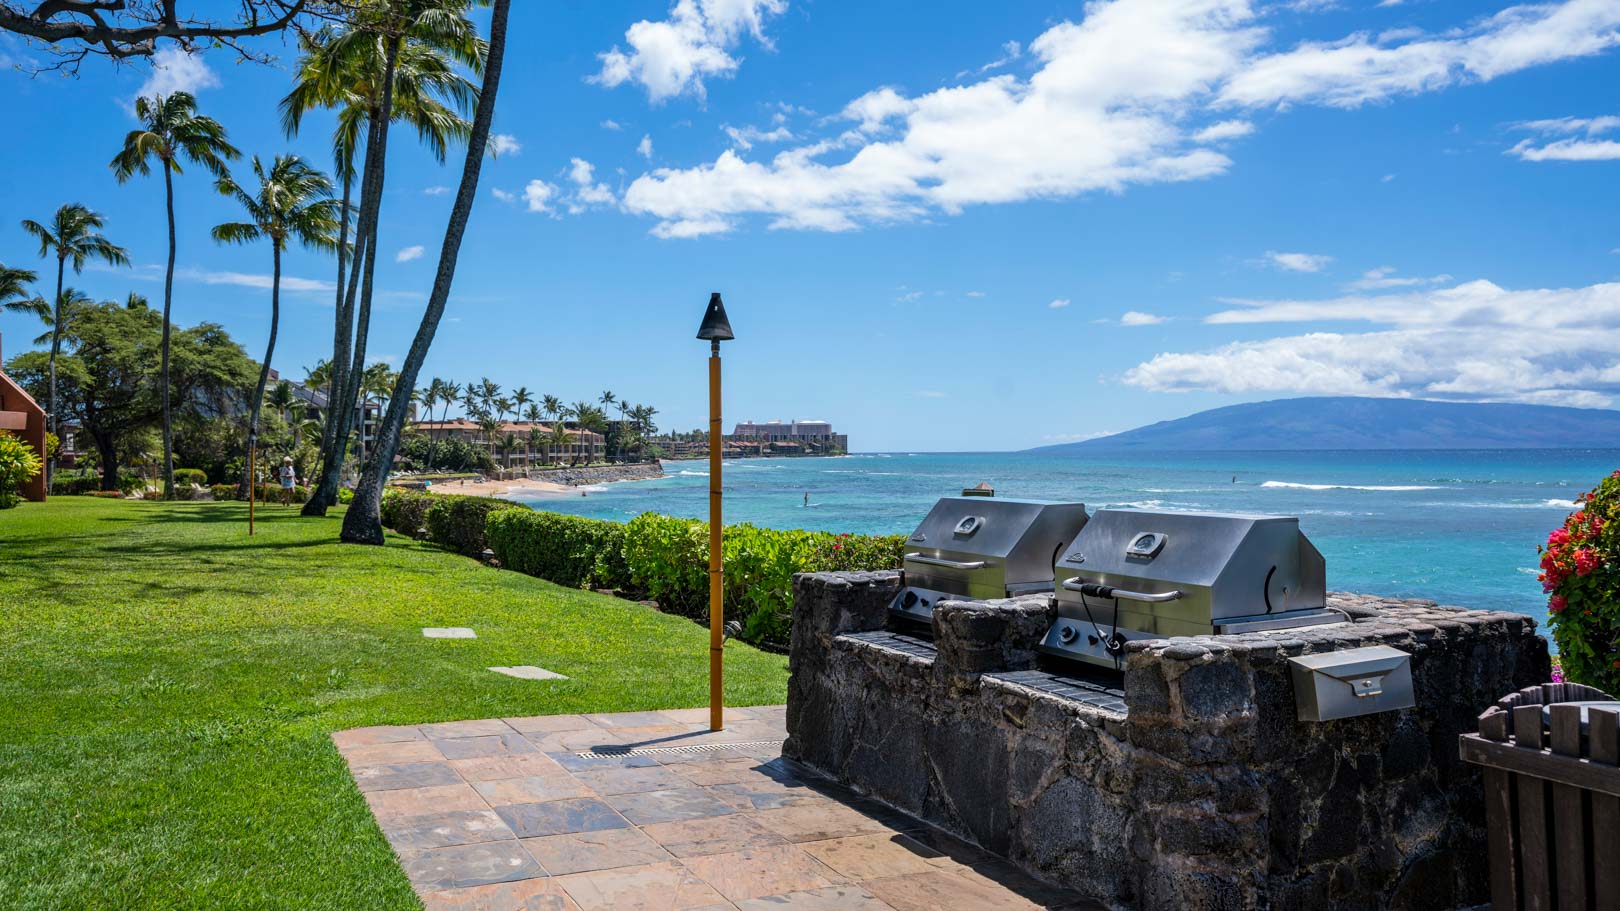 Outdoor grills facing the beach at VRI's Kuleana Club in Maui, Hawaii.